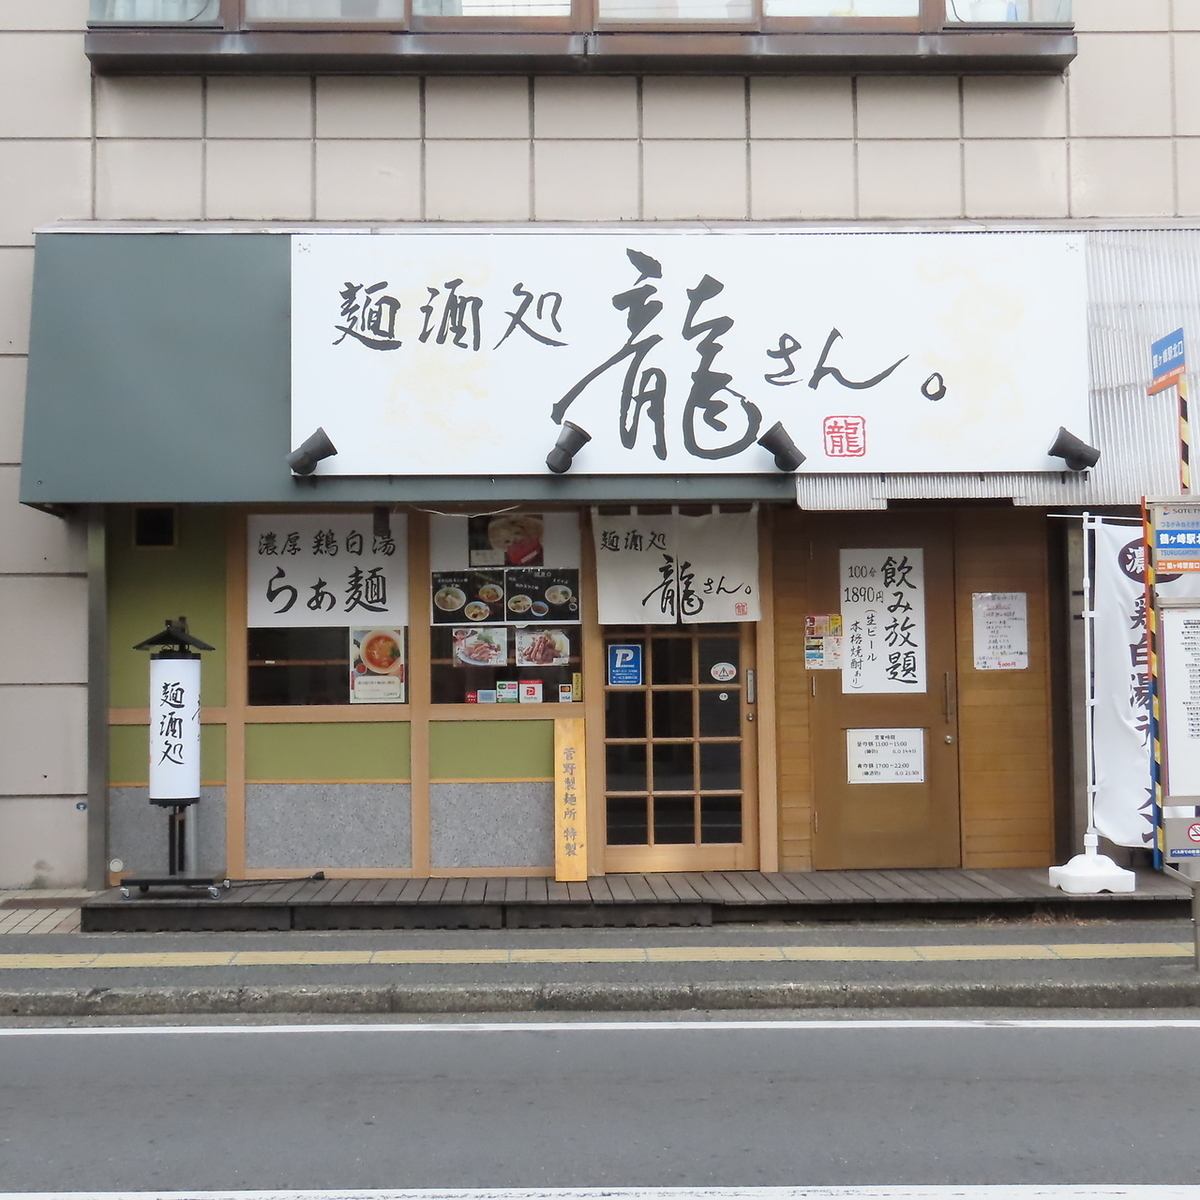 All-you-can-drink courses available ◯ Tsurugamine × Izakaya